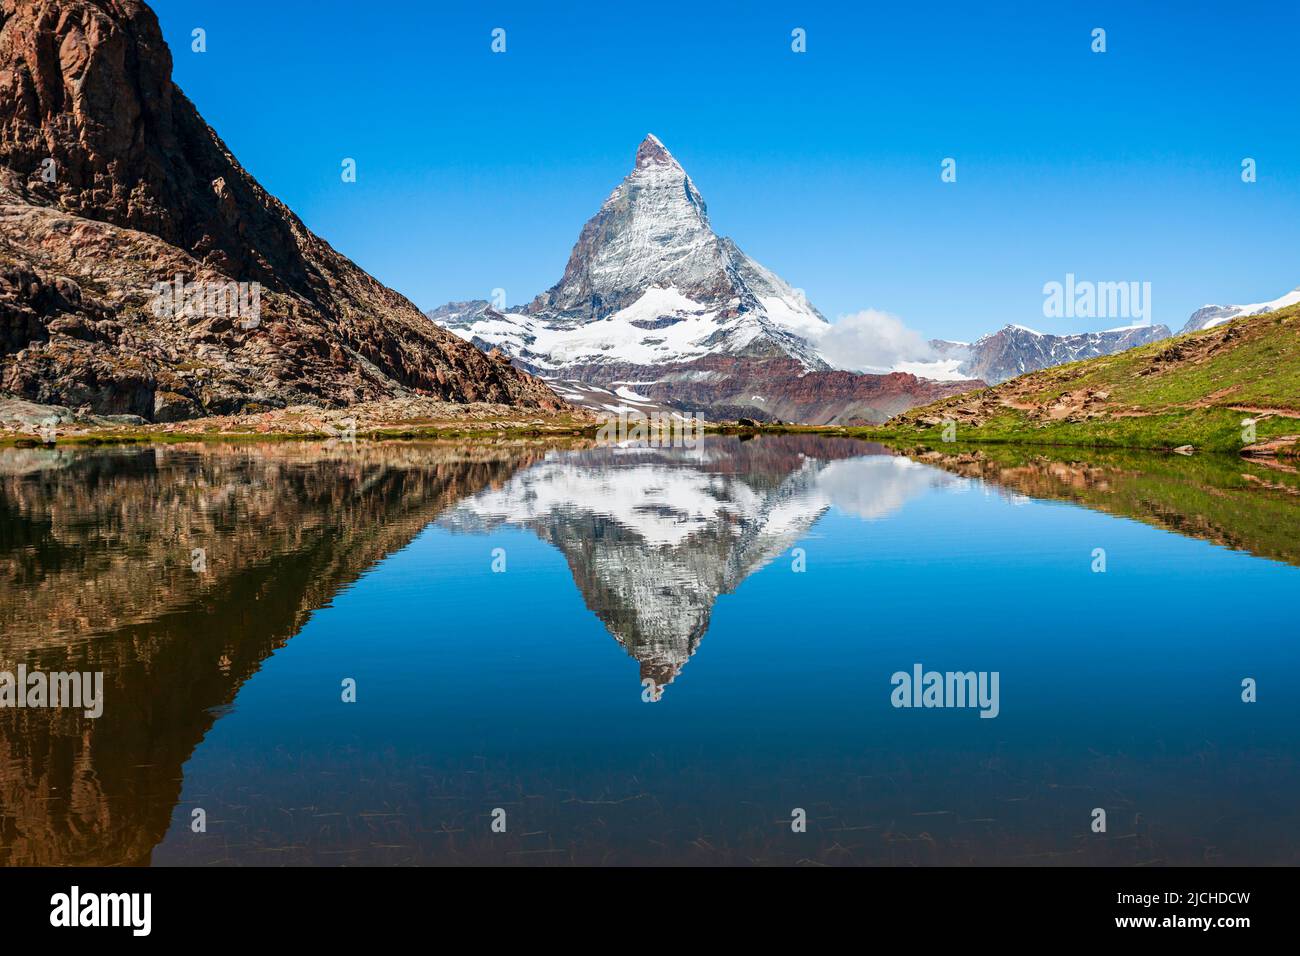 Lago Riffelsee y montaña Matterhorn en los Alpes, situado entre Suiza e Italia Foto de stock